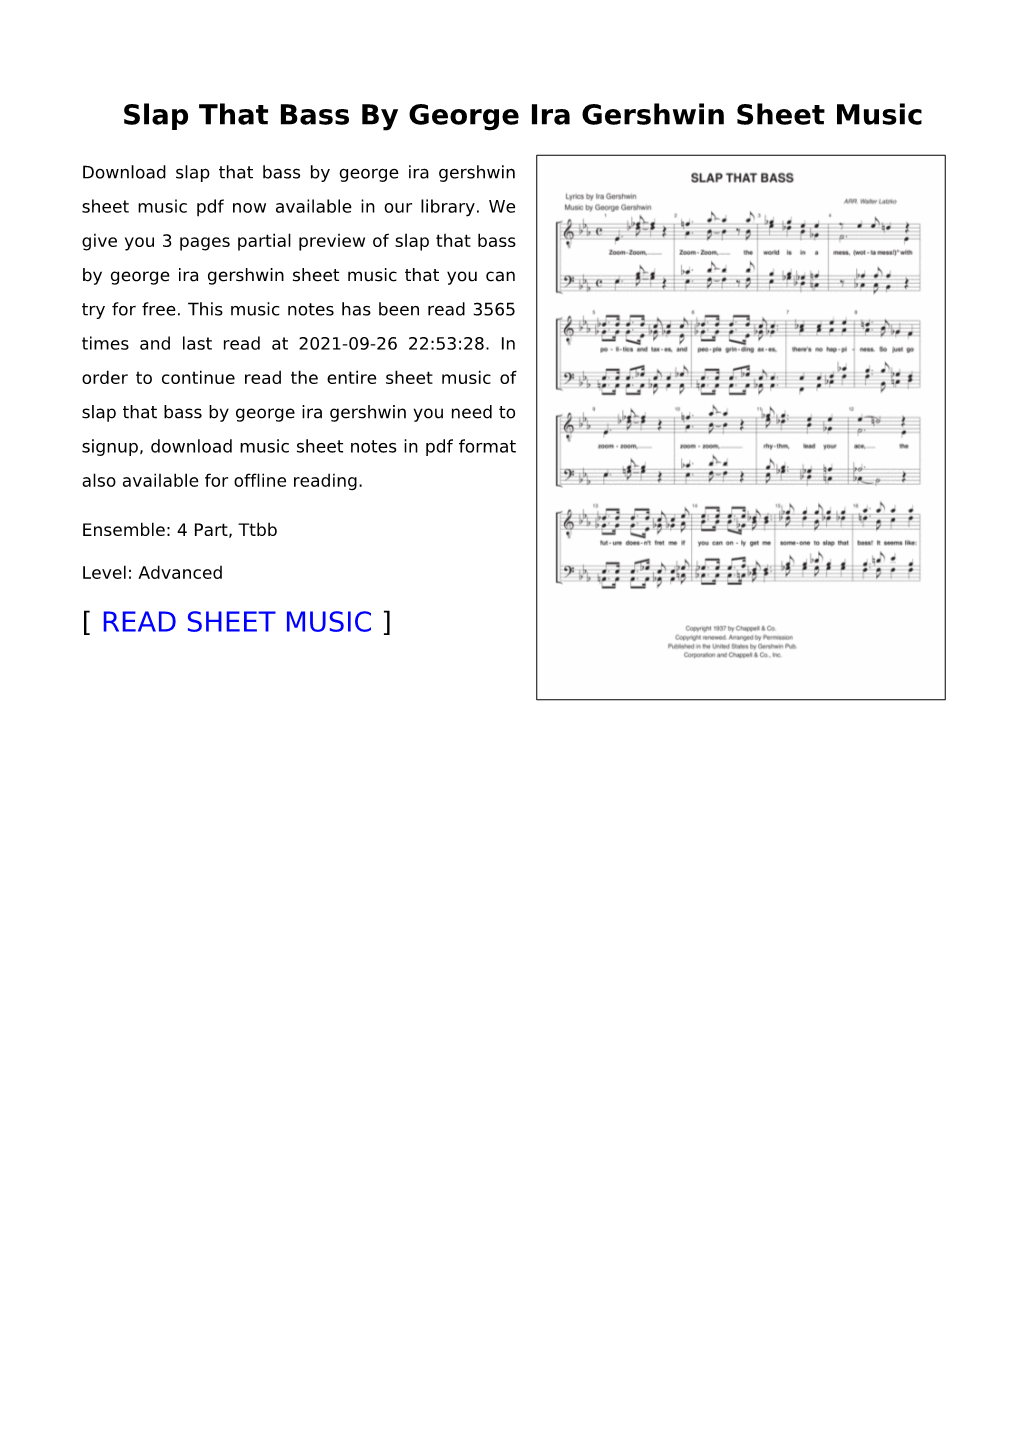 Slap That Bass by George Ira Gershwin Sheet Music